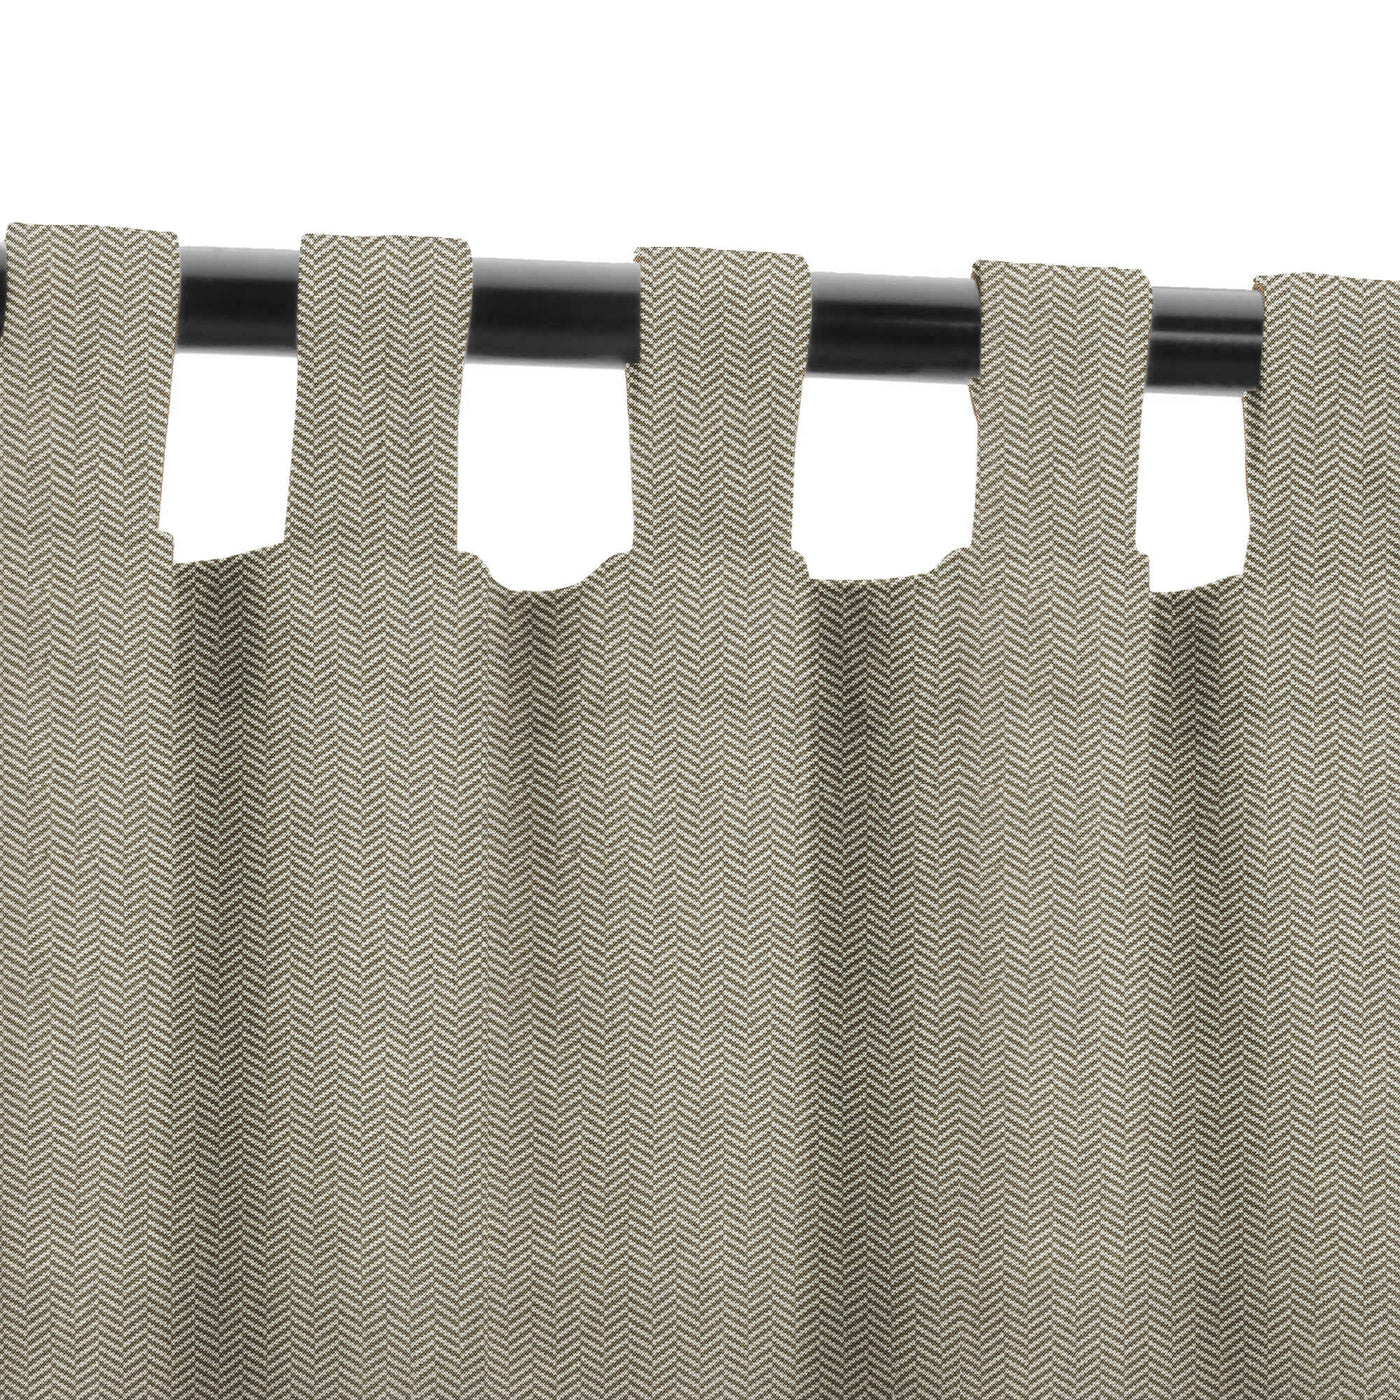 PENGI Outdoor Curtains Waterproof - Herringbone Khaki